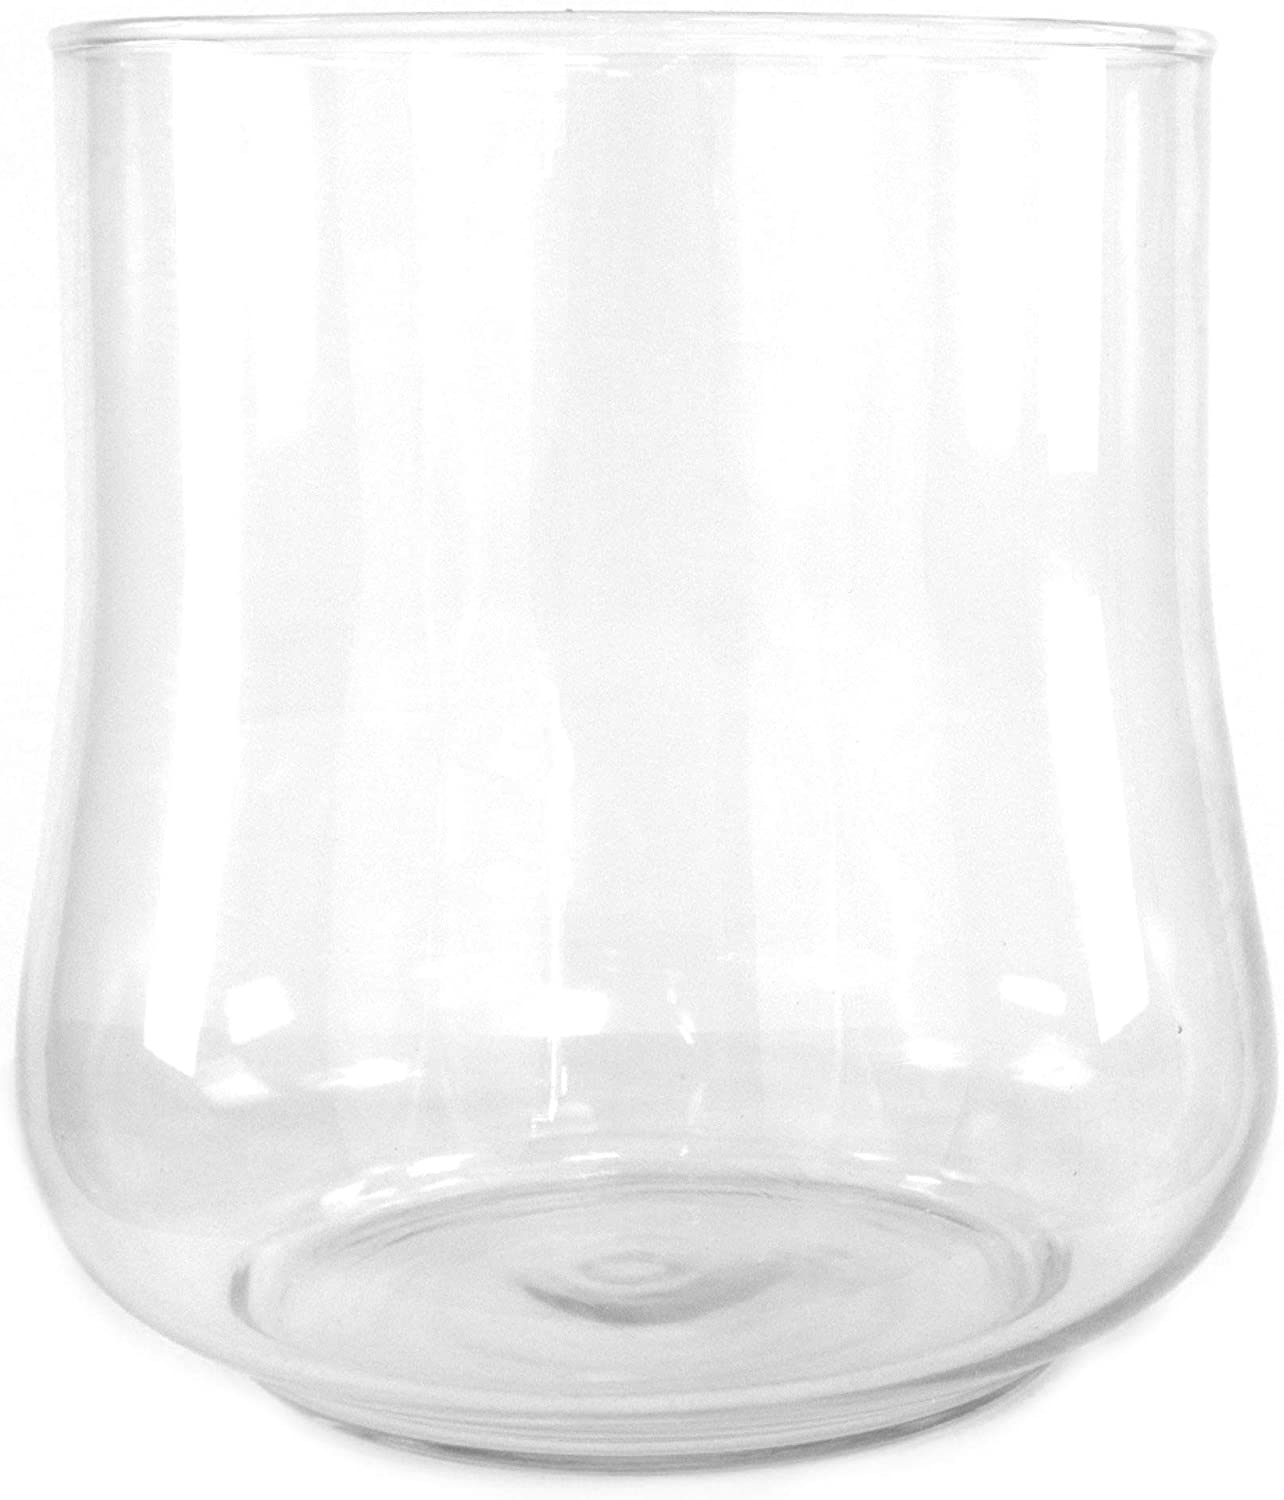 DARO DEKO Glass Vase Candle Holder Clear